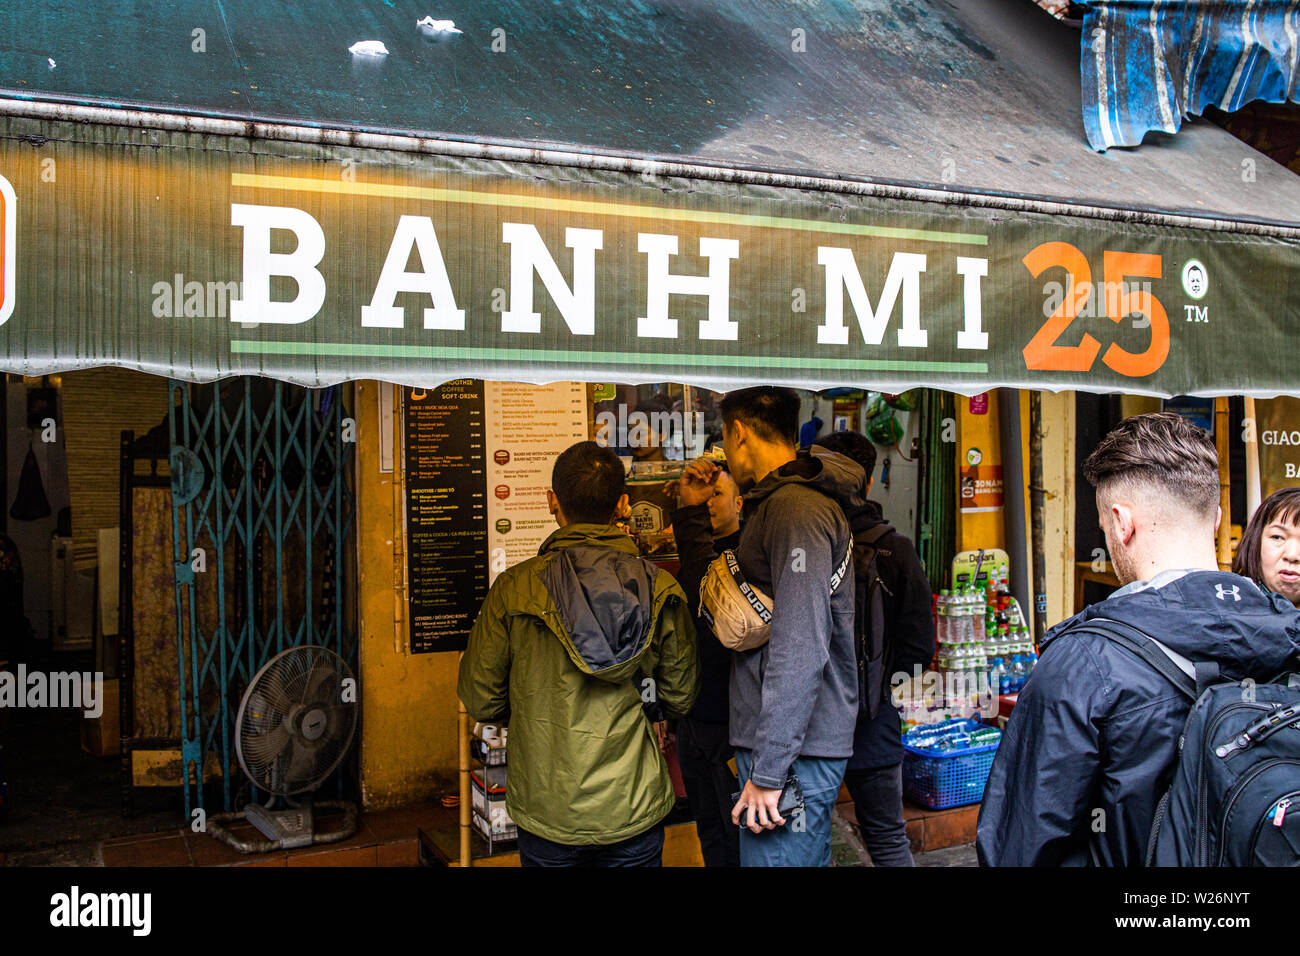 Banh Mi 25, Hanoi, Vietnam Stock Photo